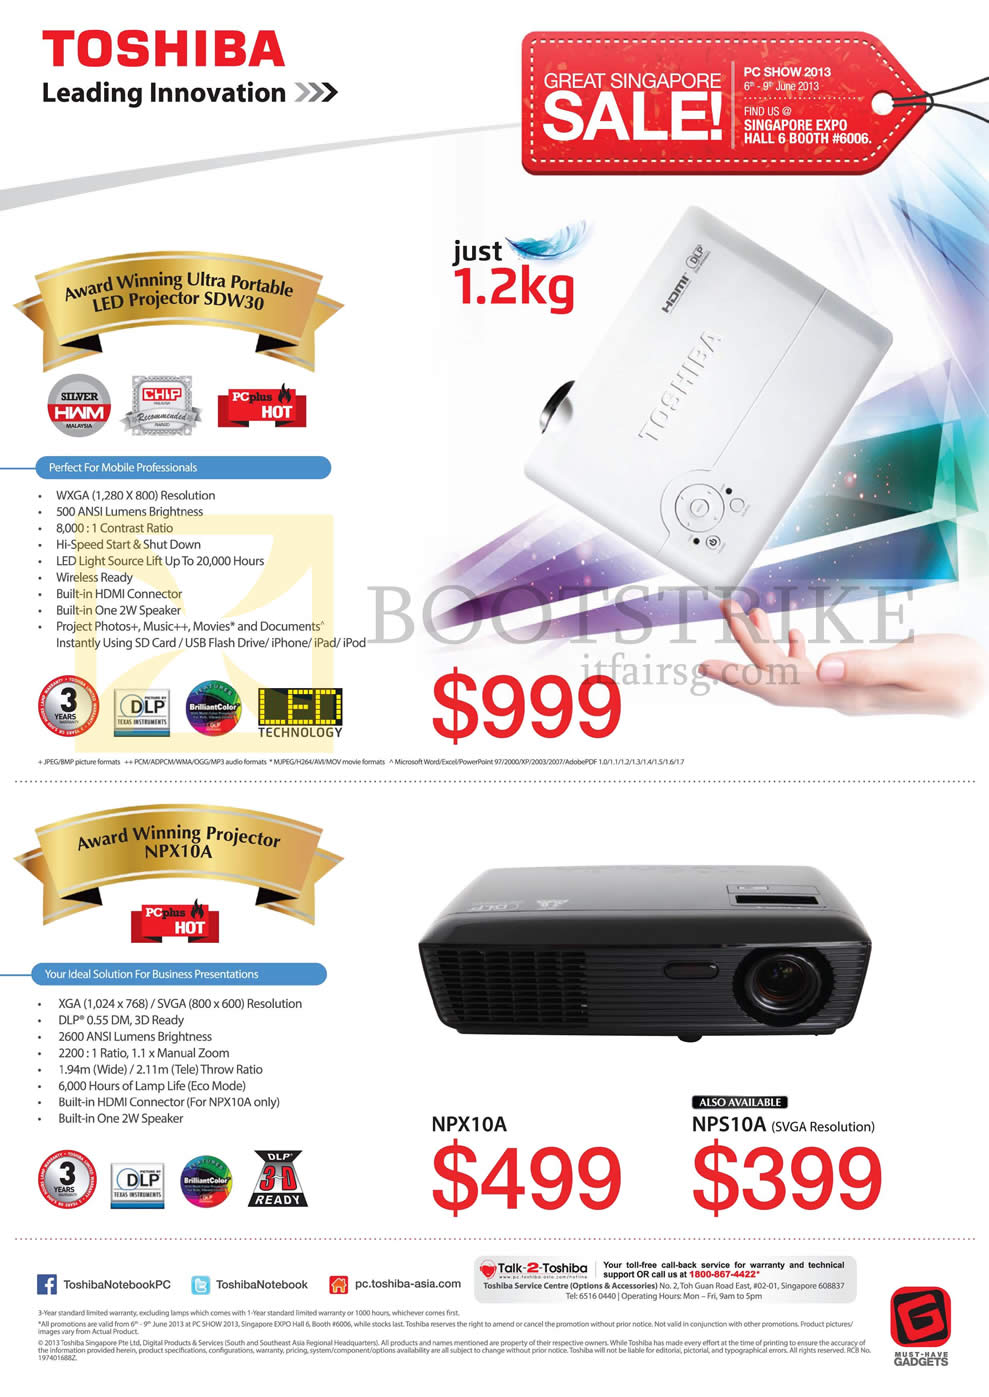 PC SHOW 2013 price list image brochure of Toshiba Projectors SDW30, NPX10A